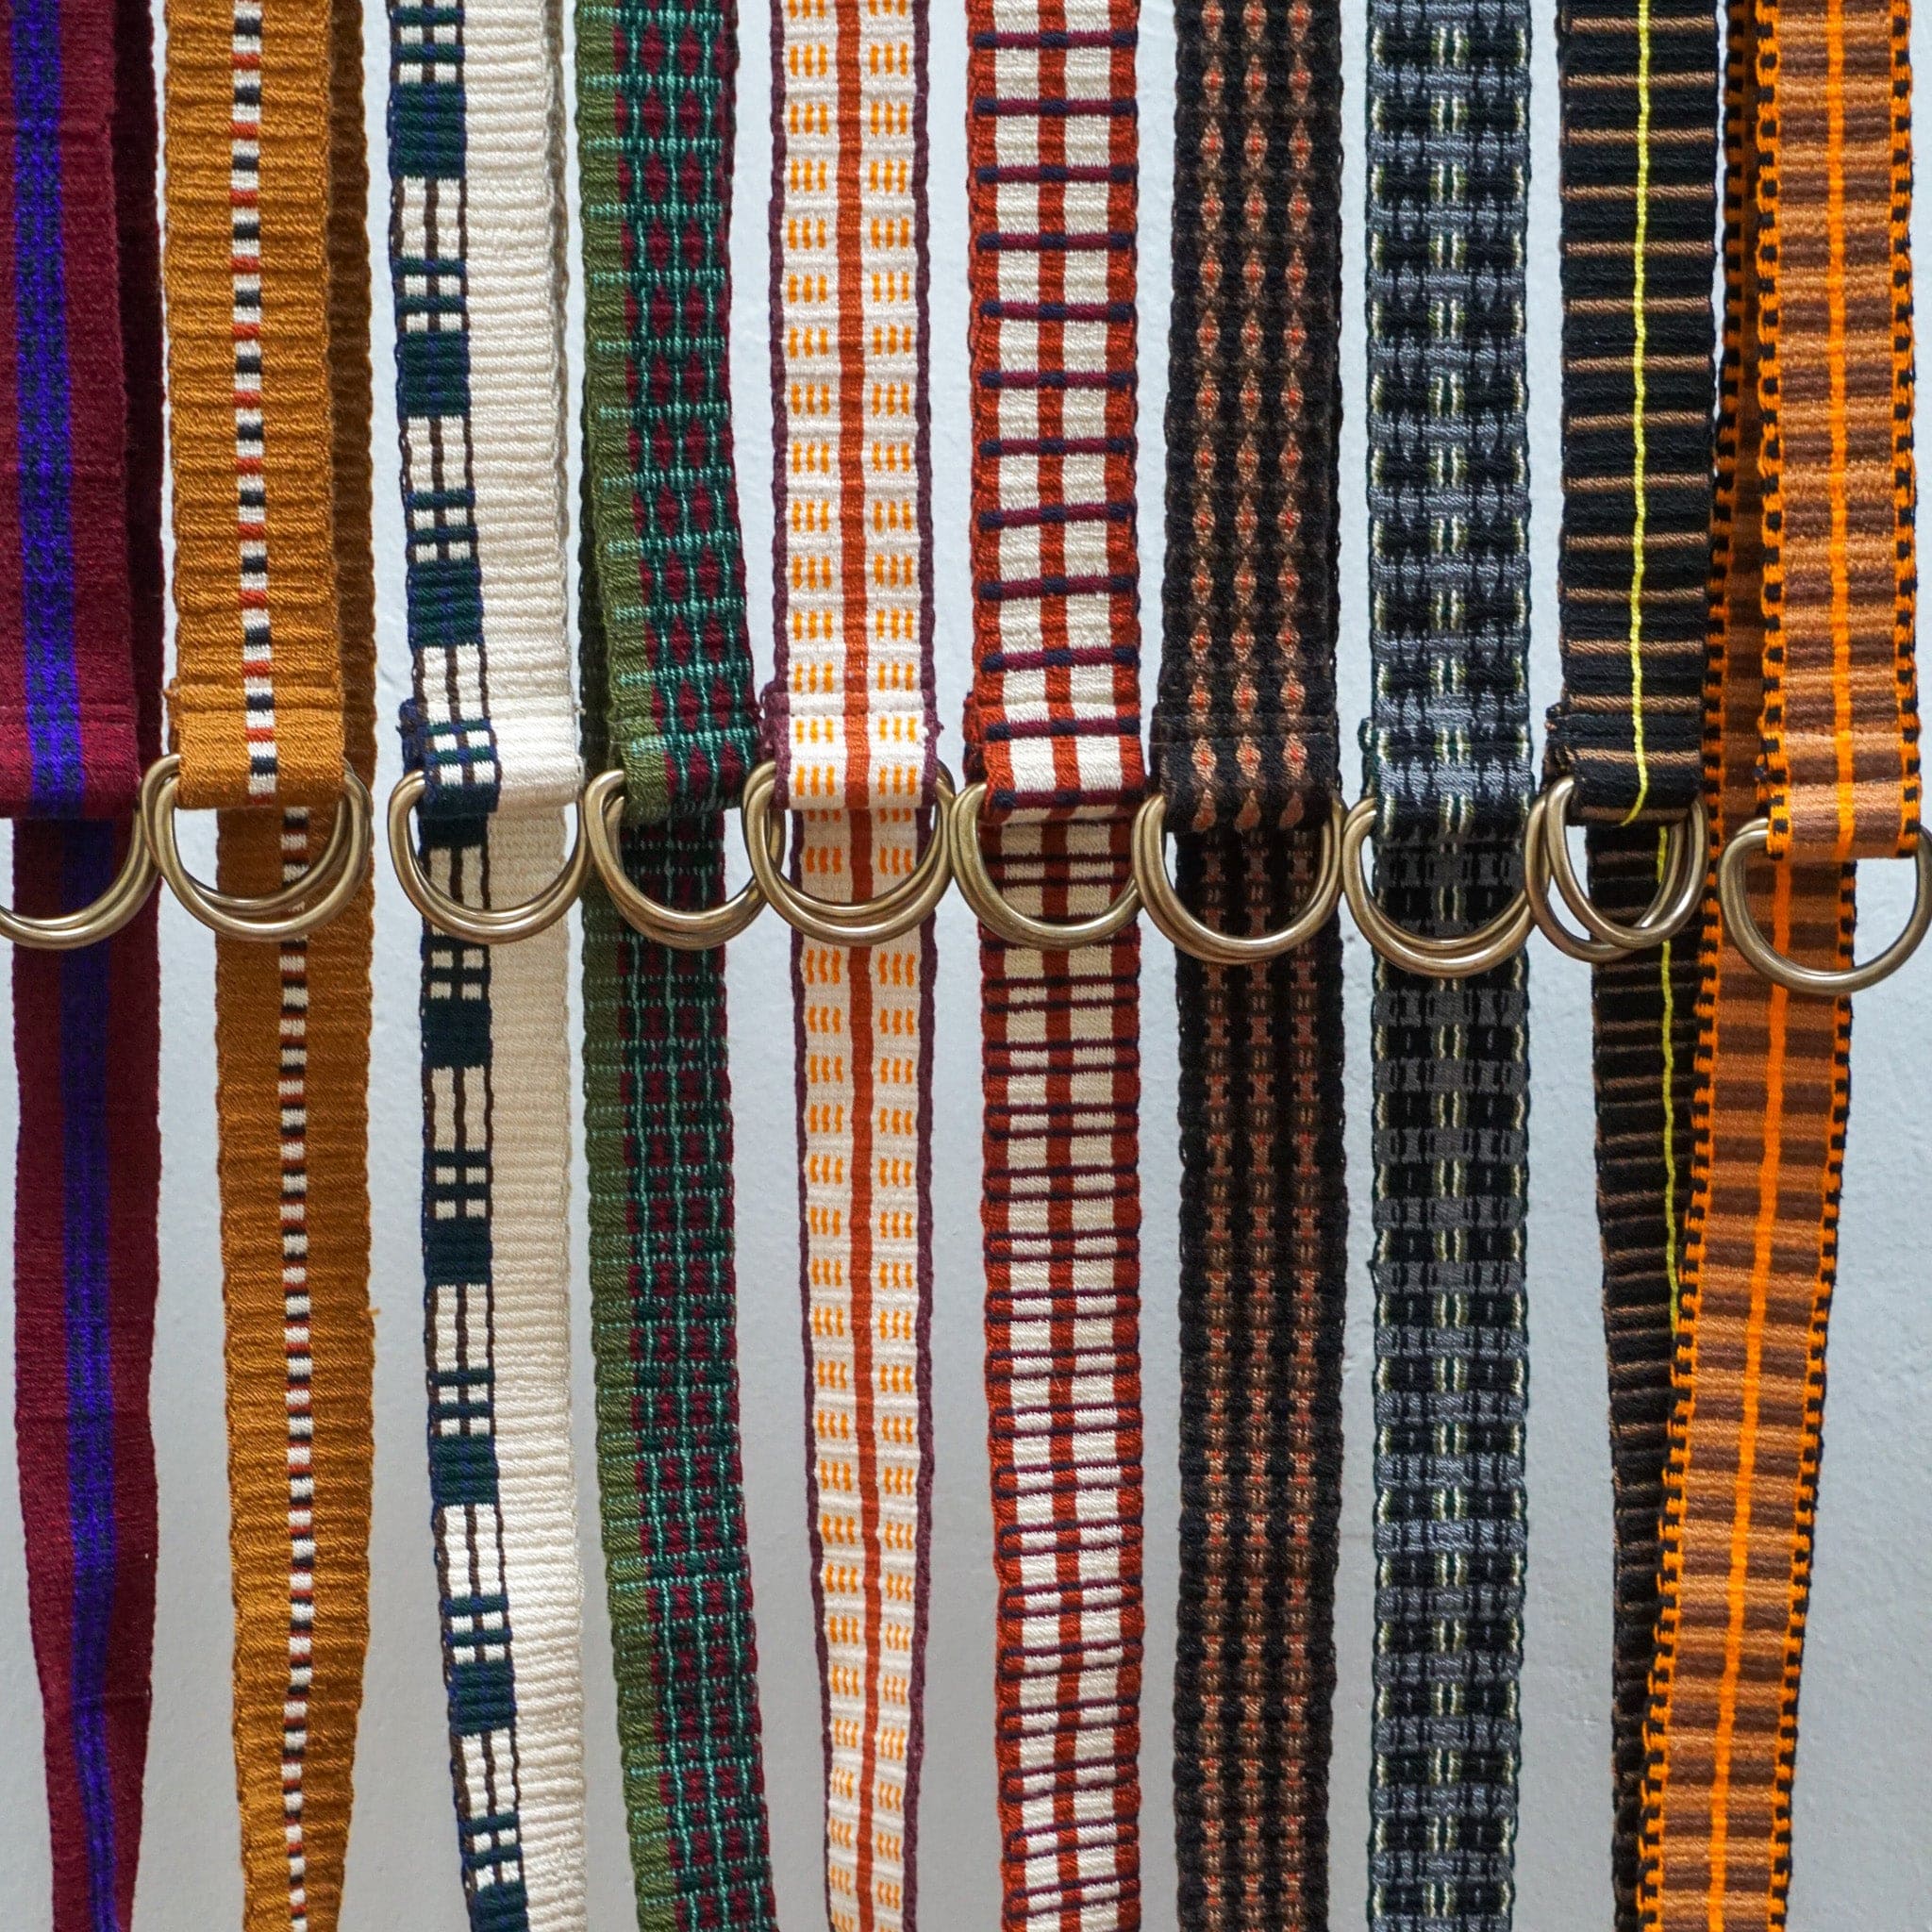 Guanabana Apparel & Accessories Braided Belt by Guanabana